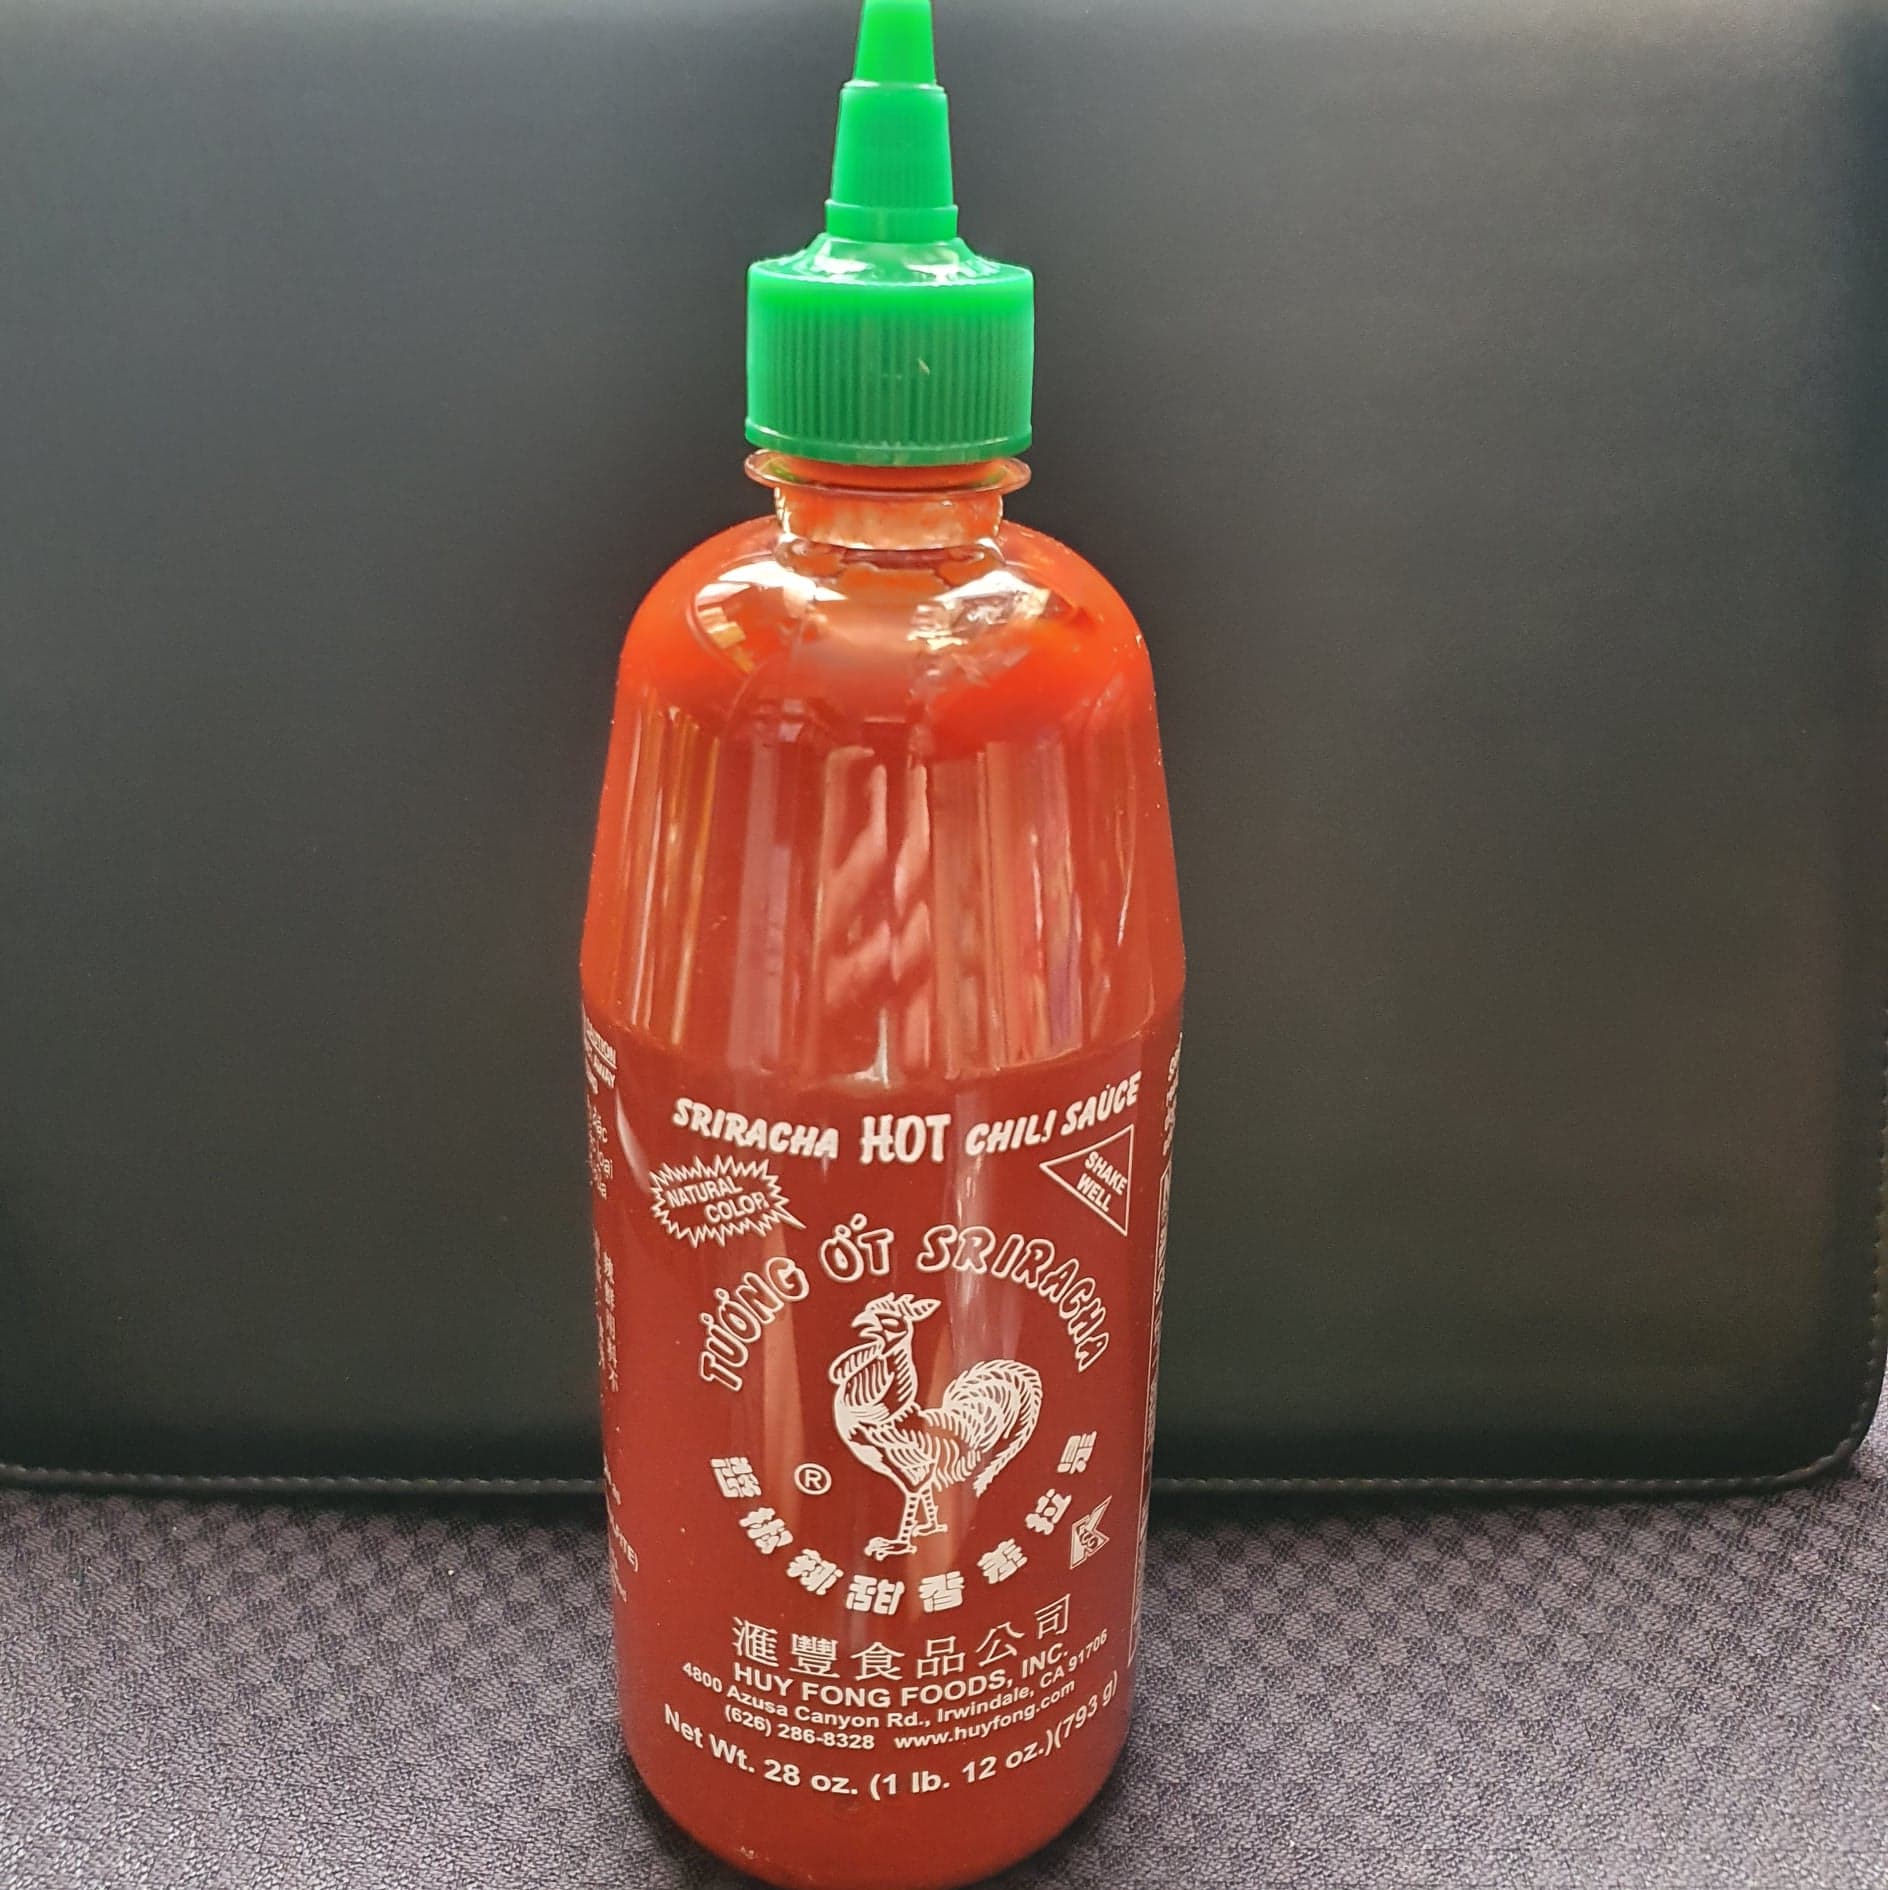 Huy Fong Foods Sriracha Hot Chili Sauce Bottle, 28 oz 